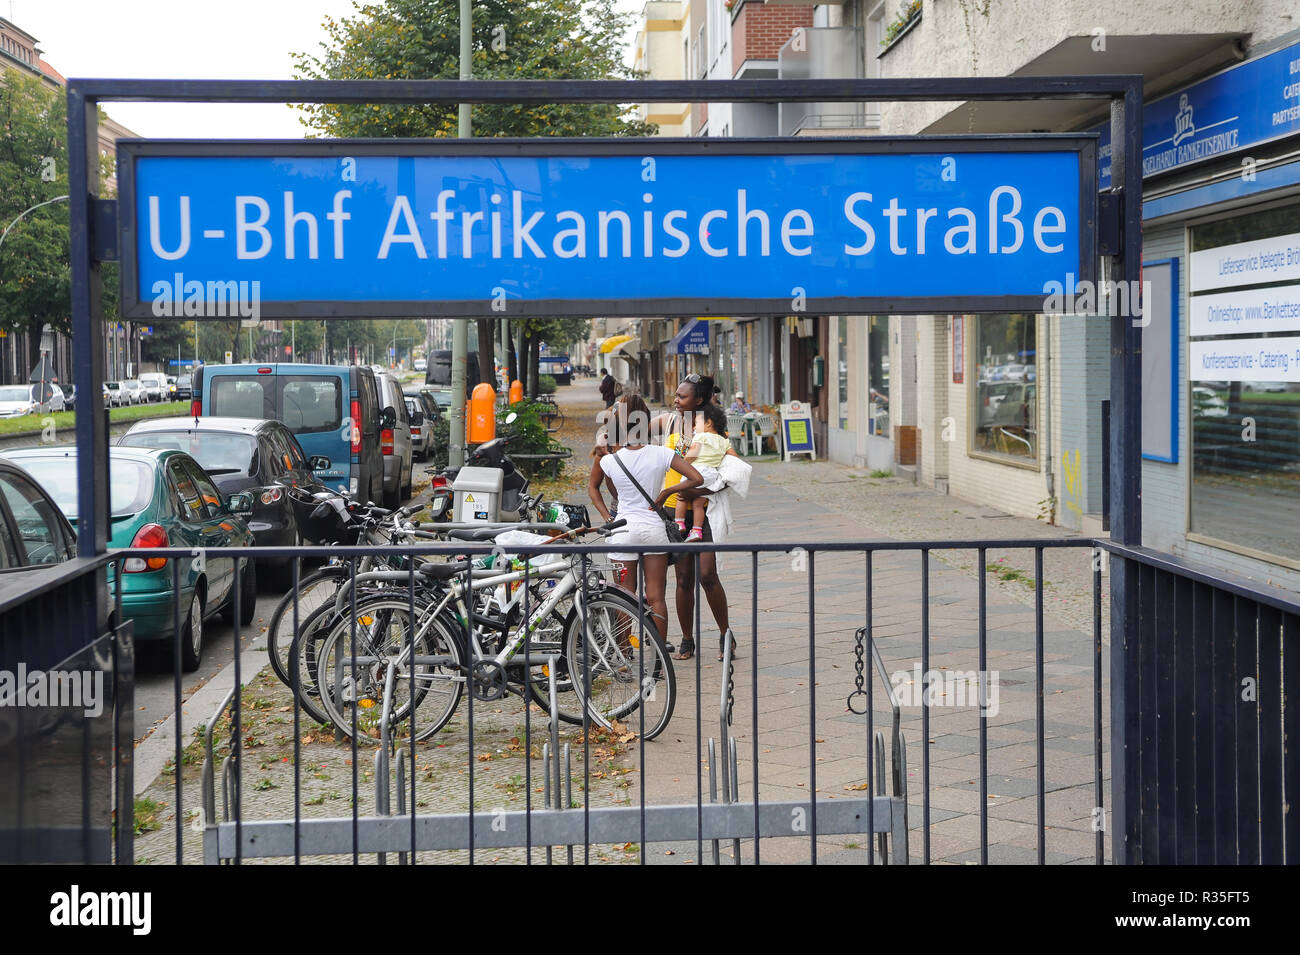 03.10.2011, Berlin, Germany, Europe - Entrance to the underground metro station Afrikanische Strasse in Berlin-Wedding. Stock Photo